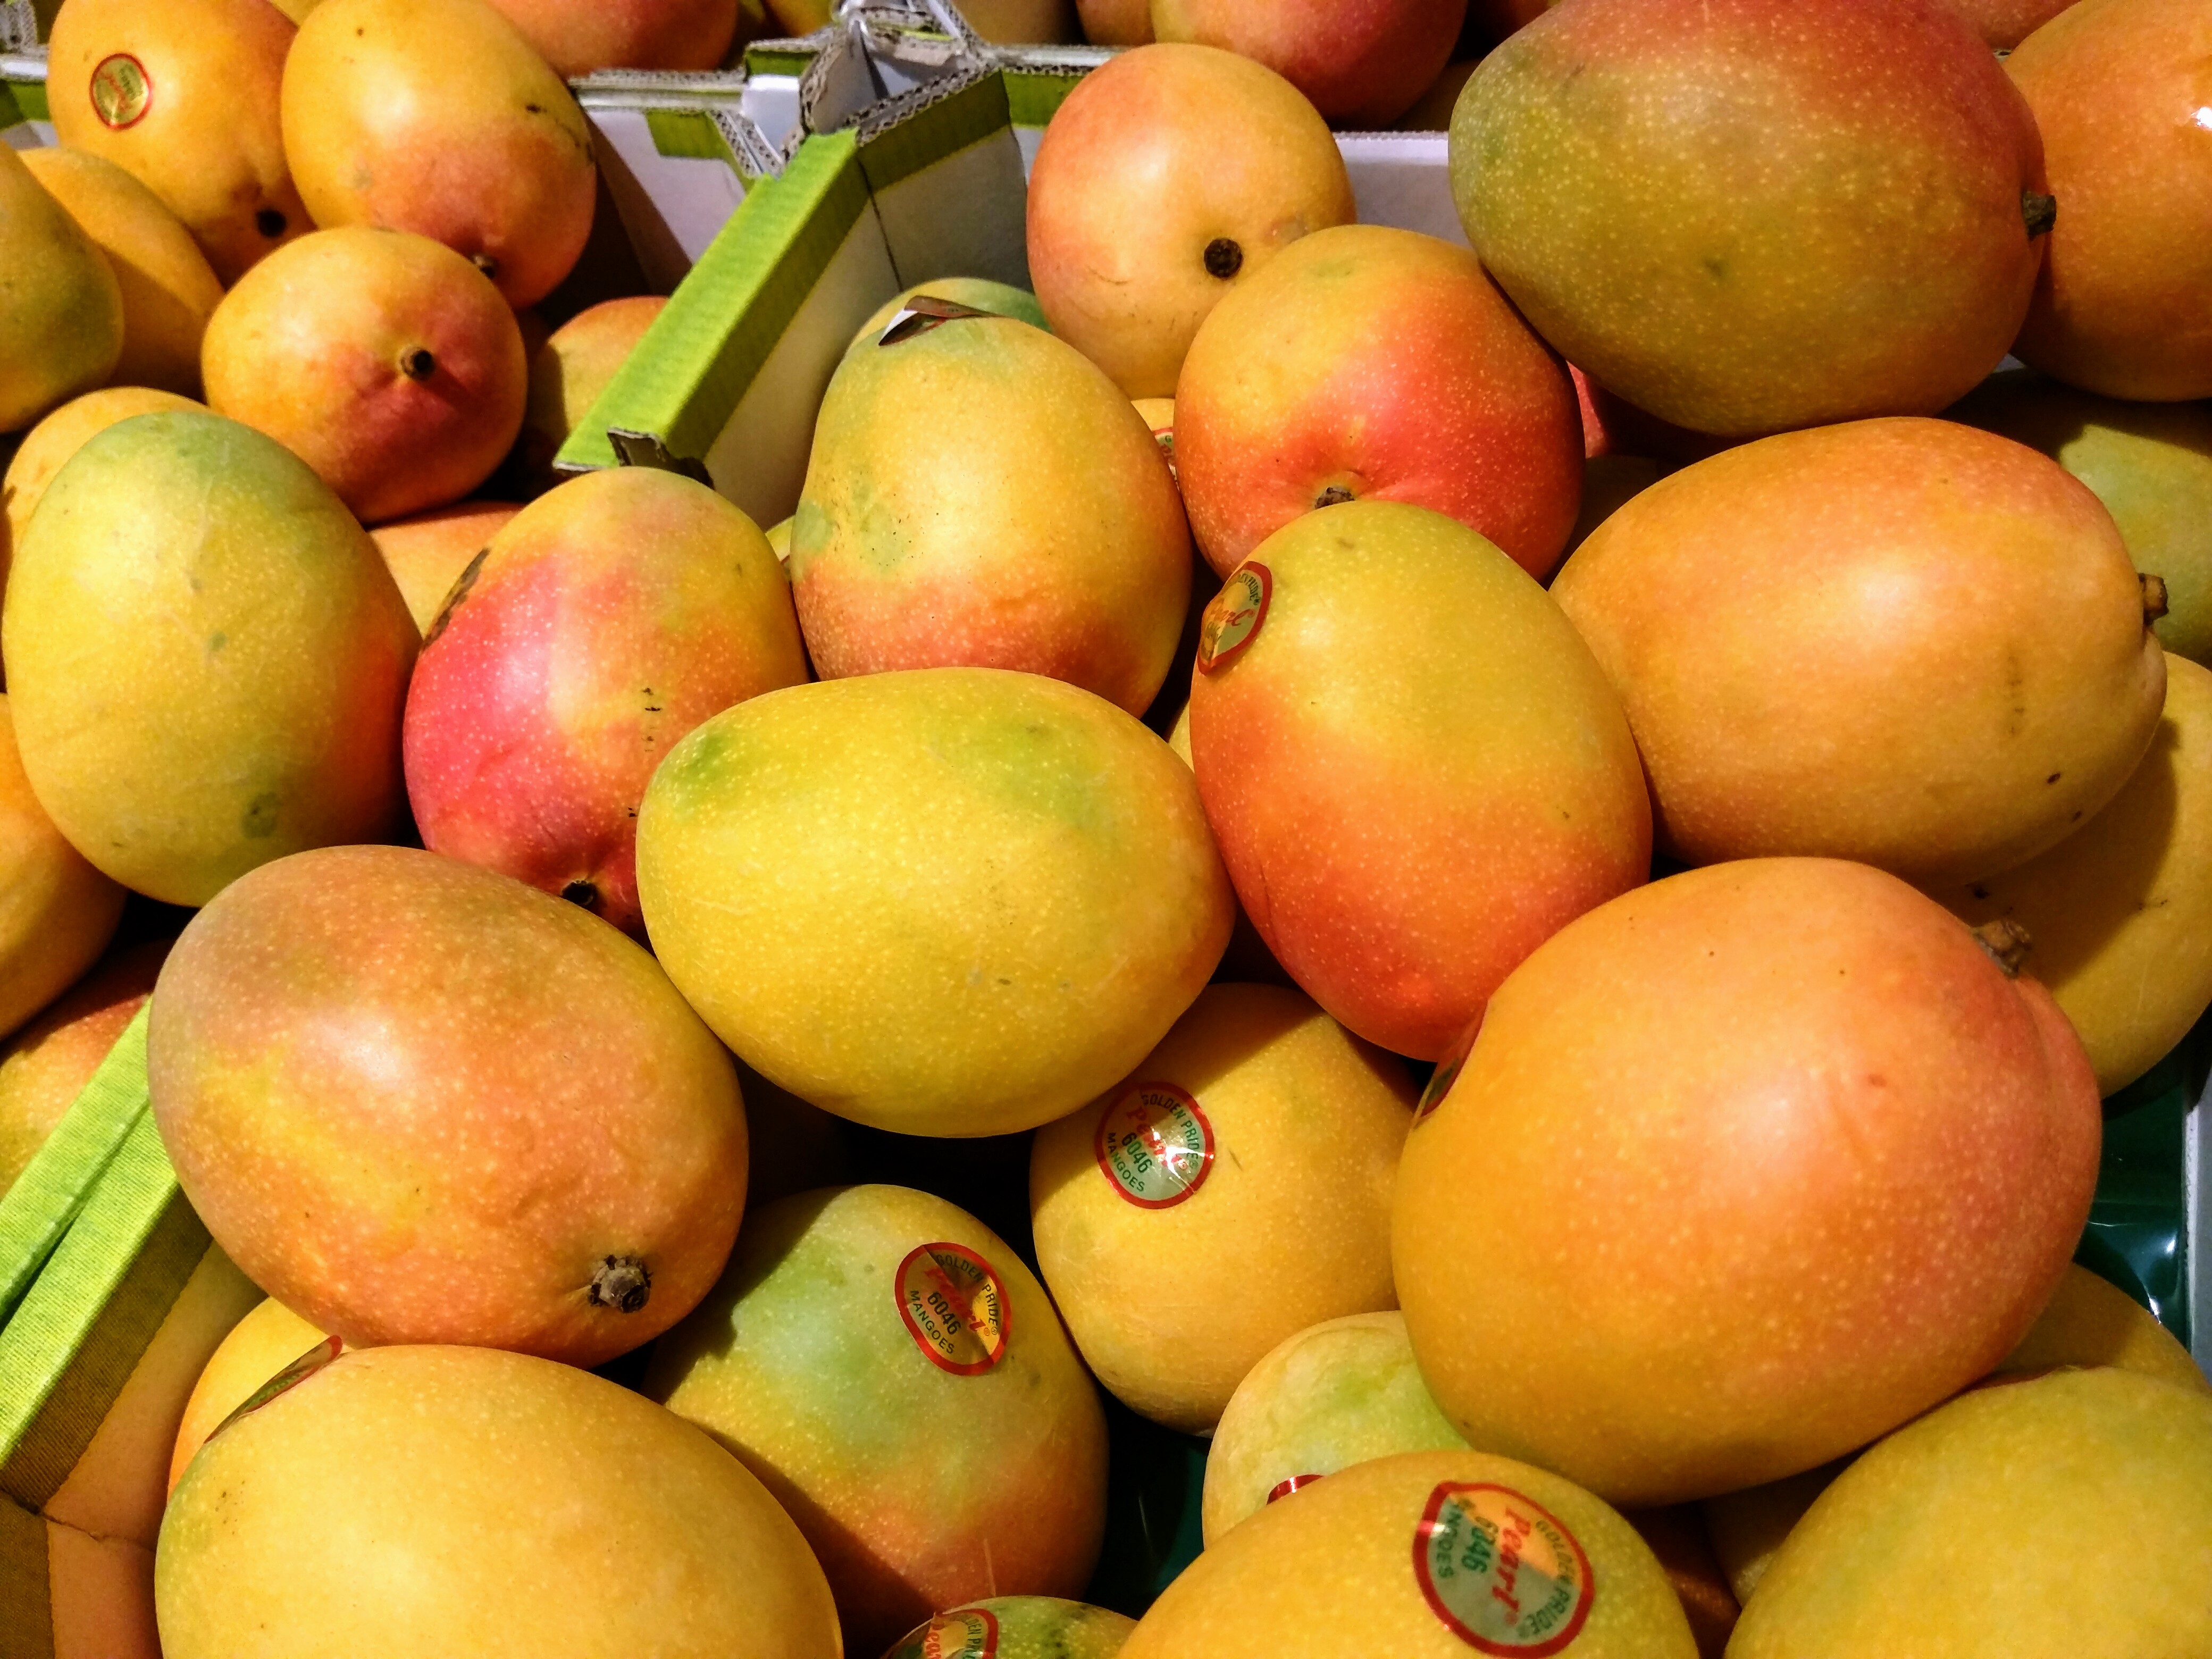 File:Mangoes on sale in Australia.jpg - Wikimedia Commons